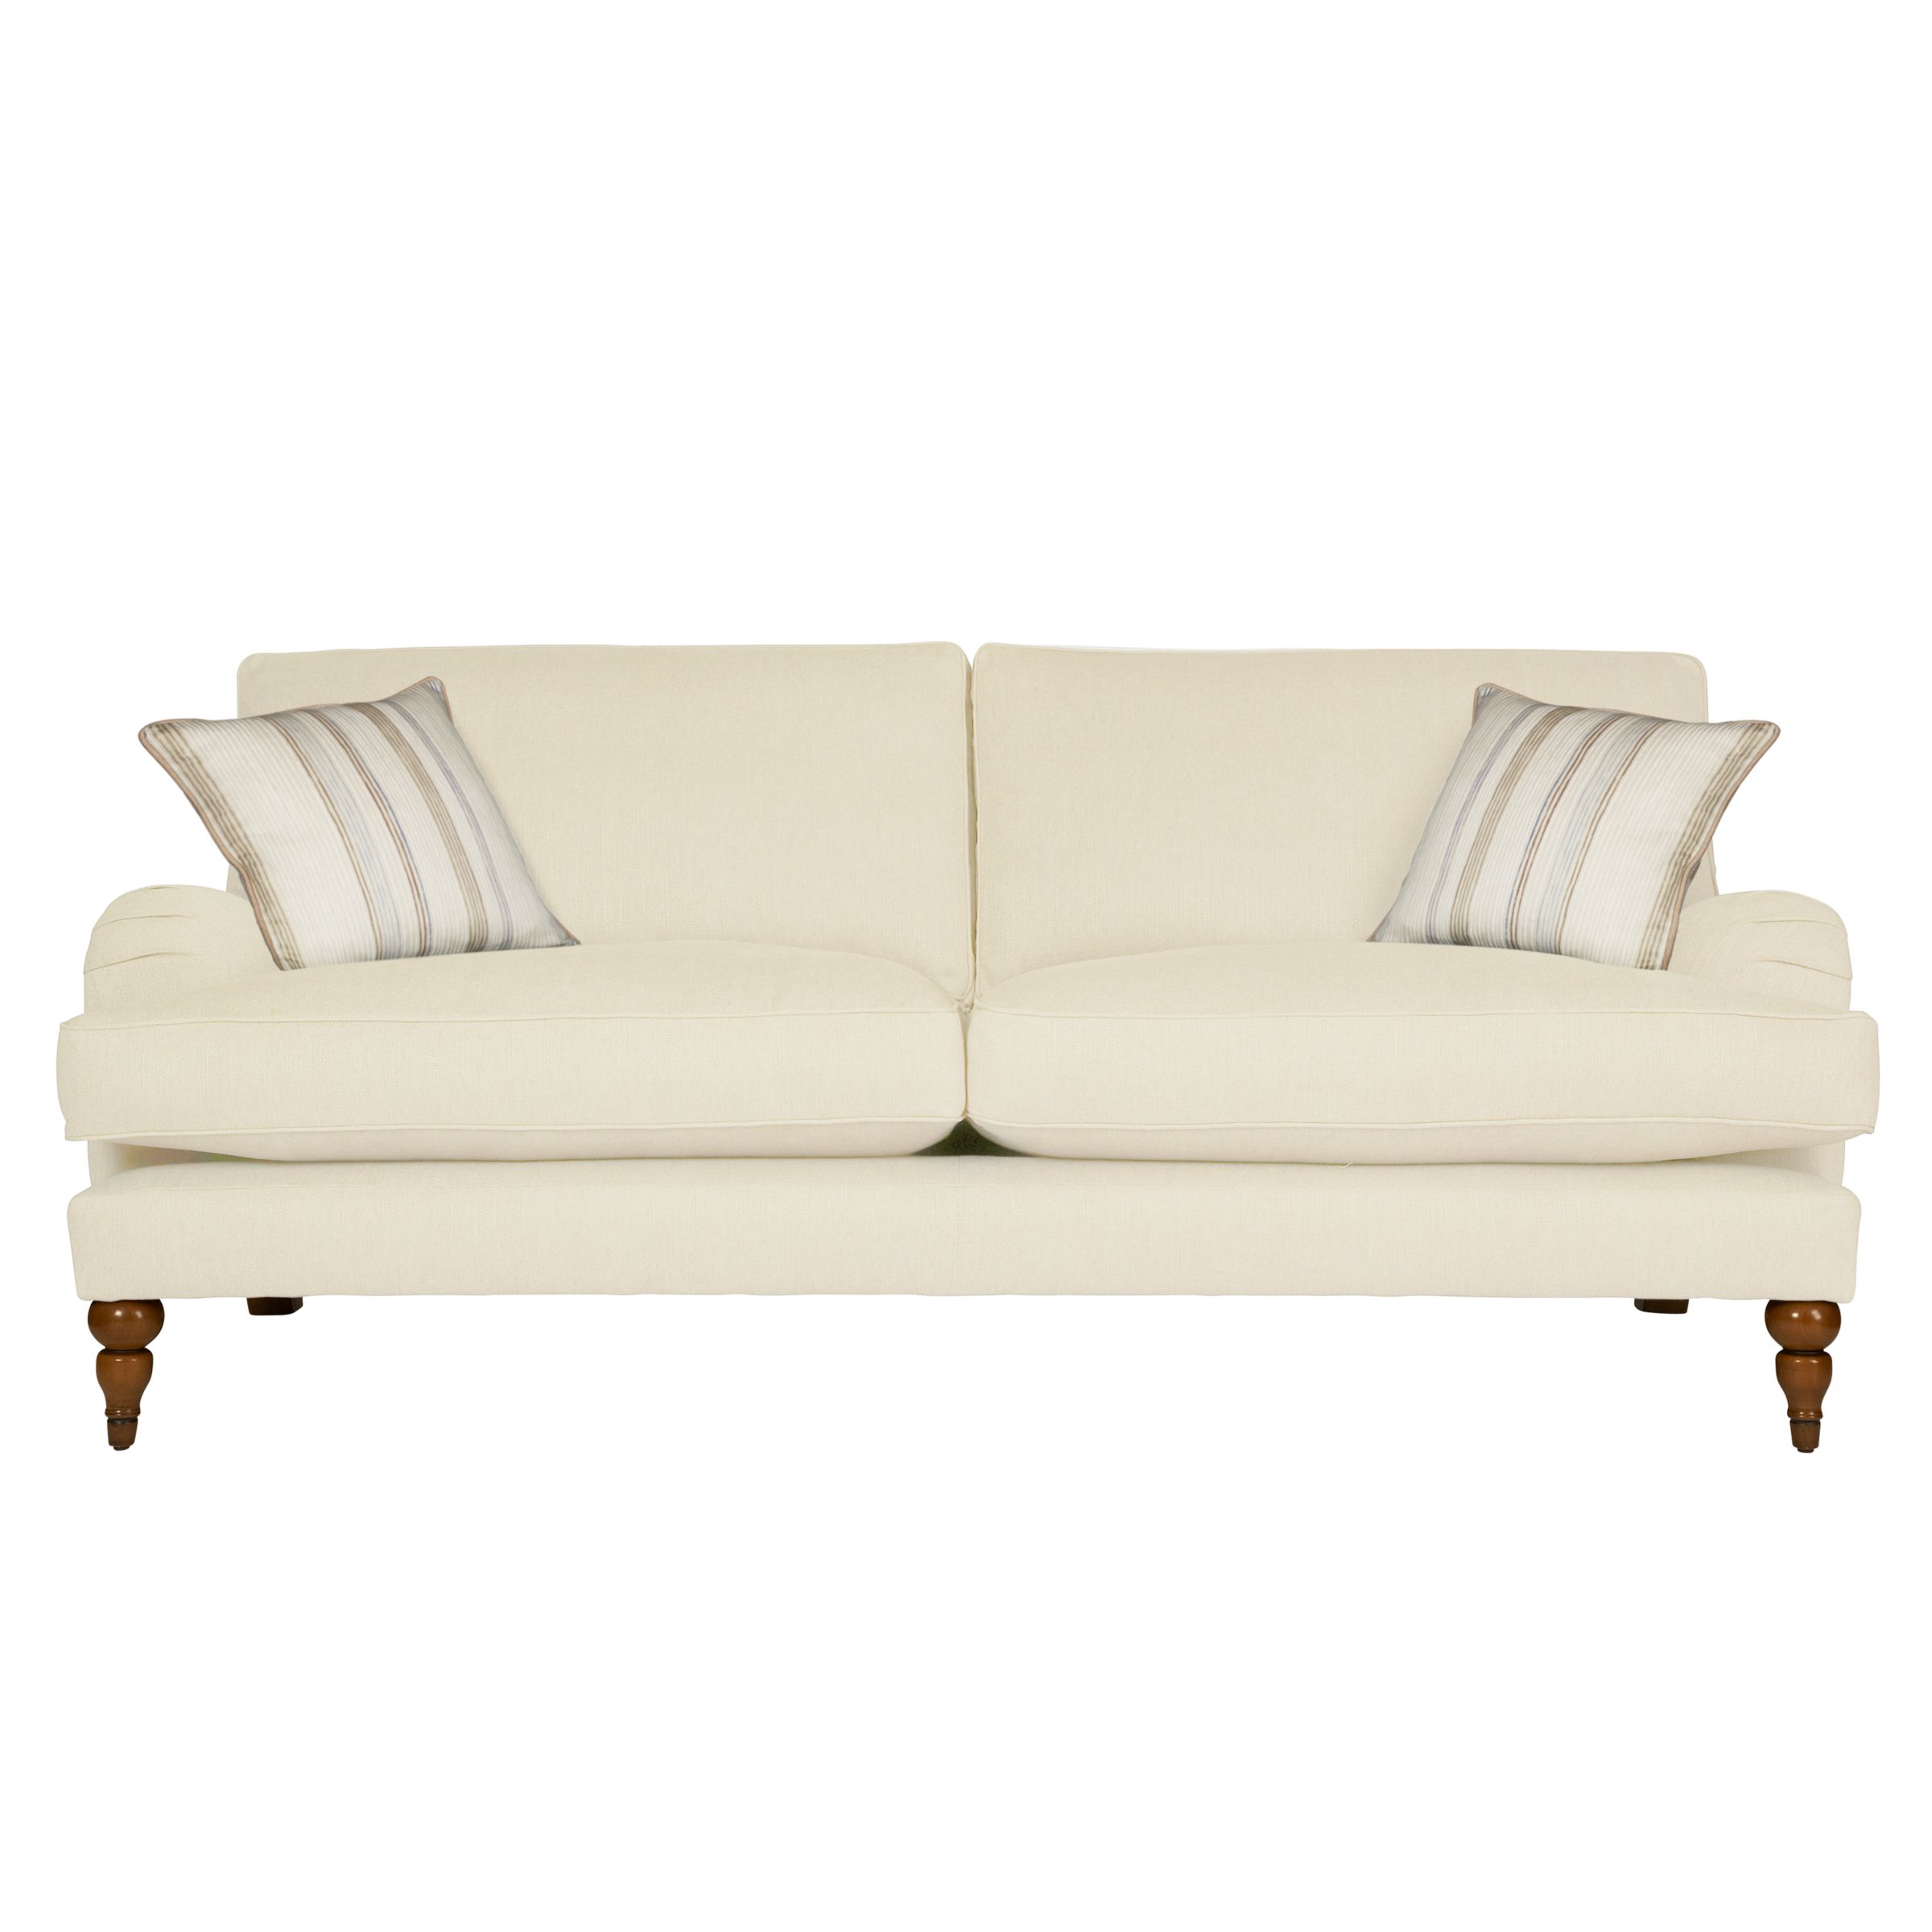 John Lewis Penryn Large Sofa, White / Sackville, width 202cm